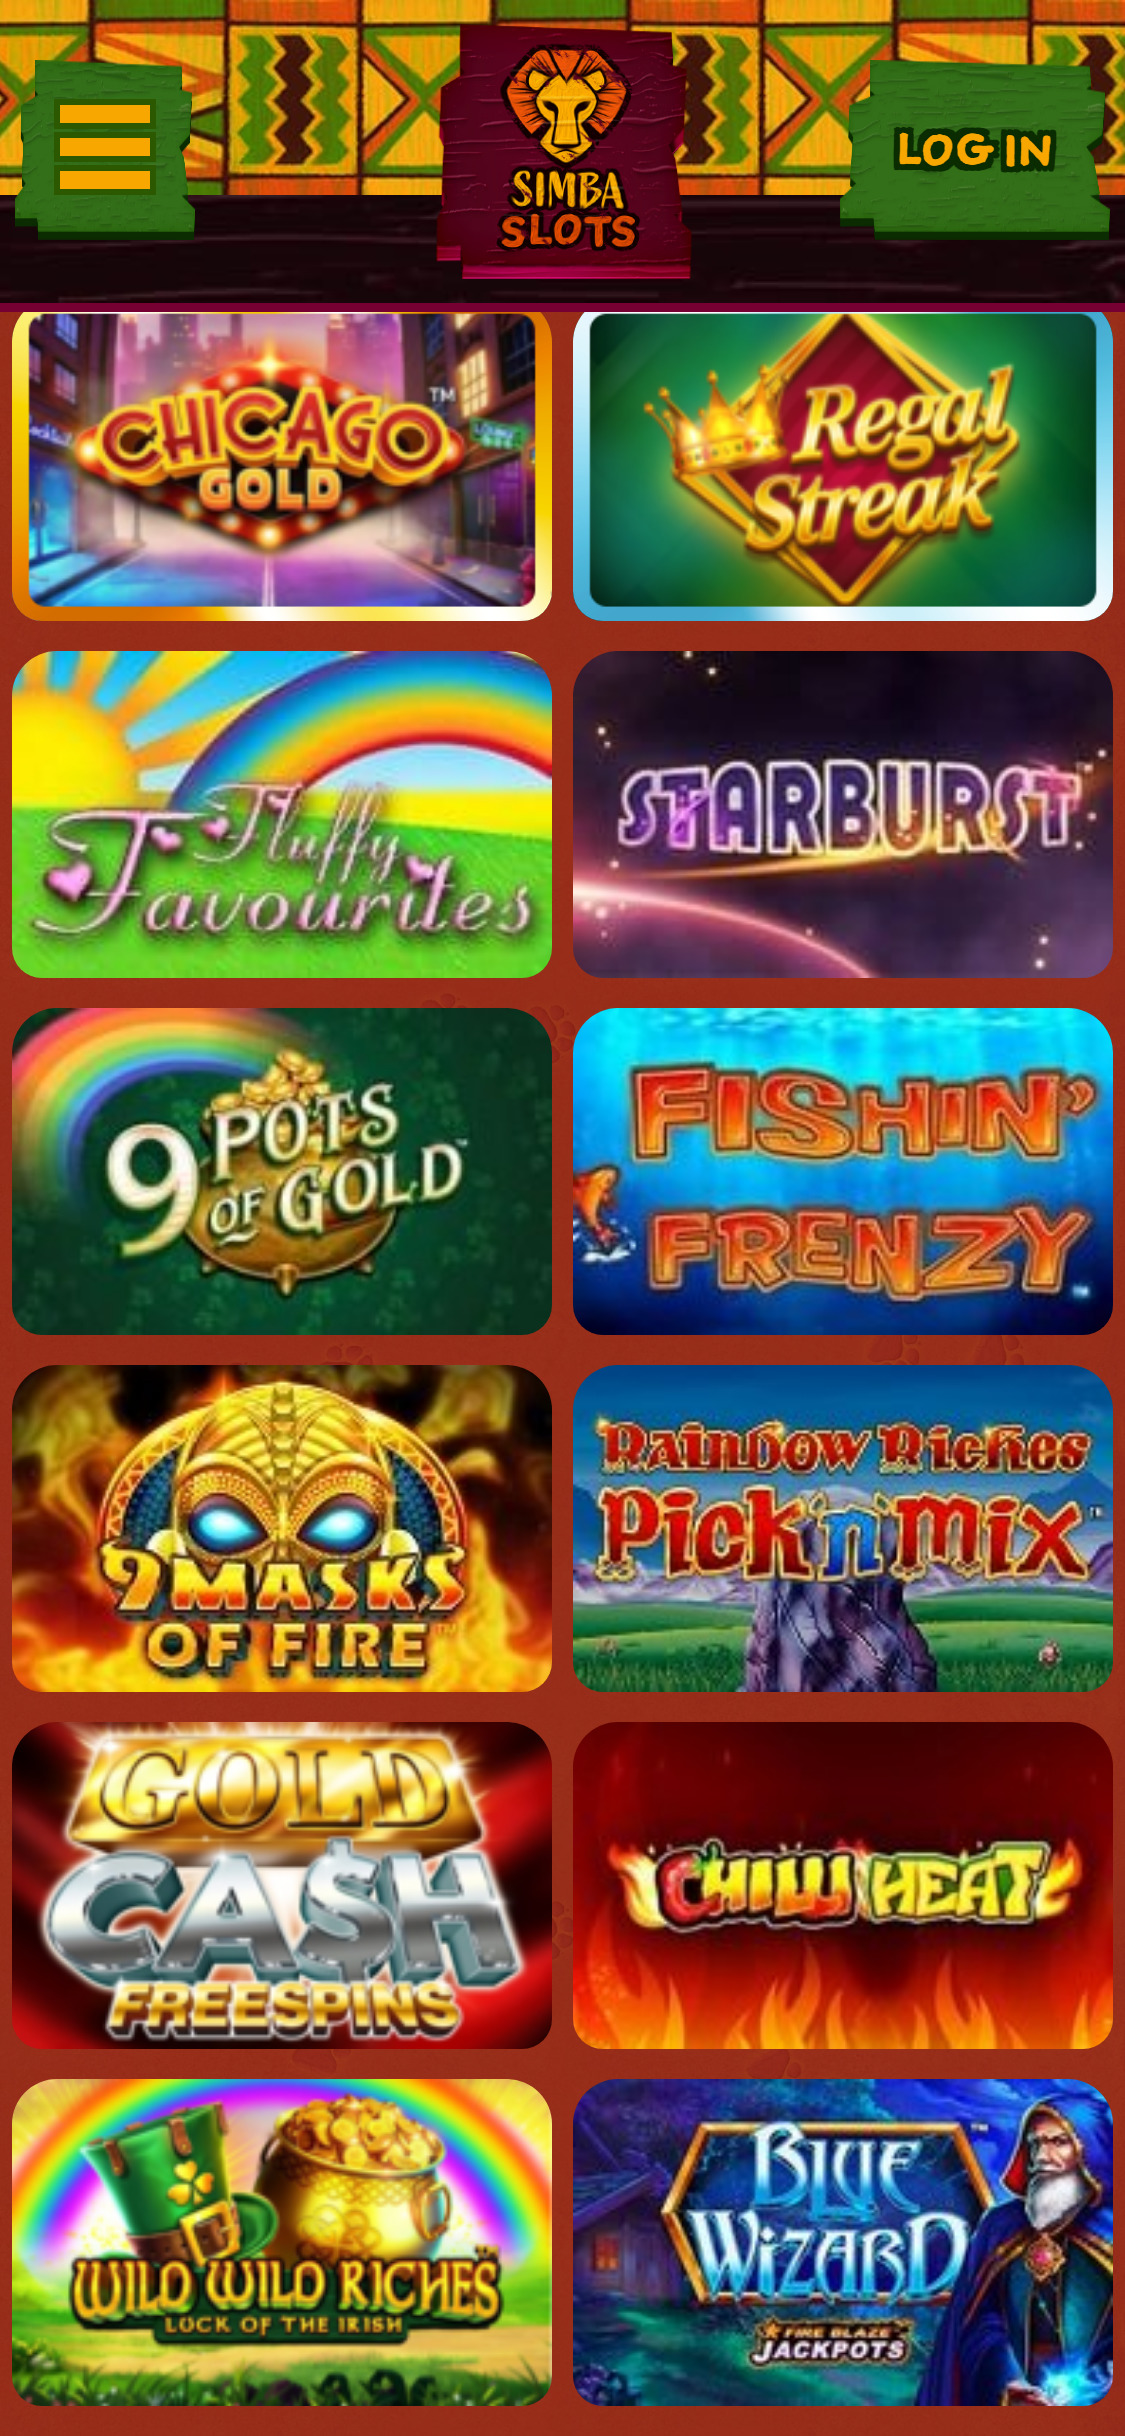 Simba Slots Casino Mobile Games Review